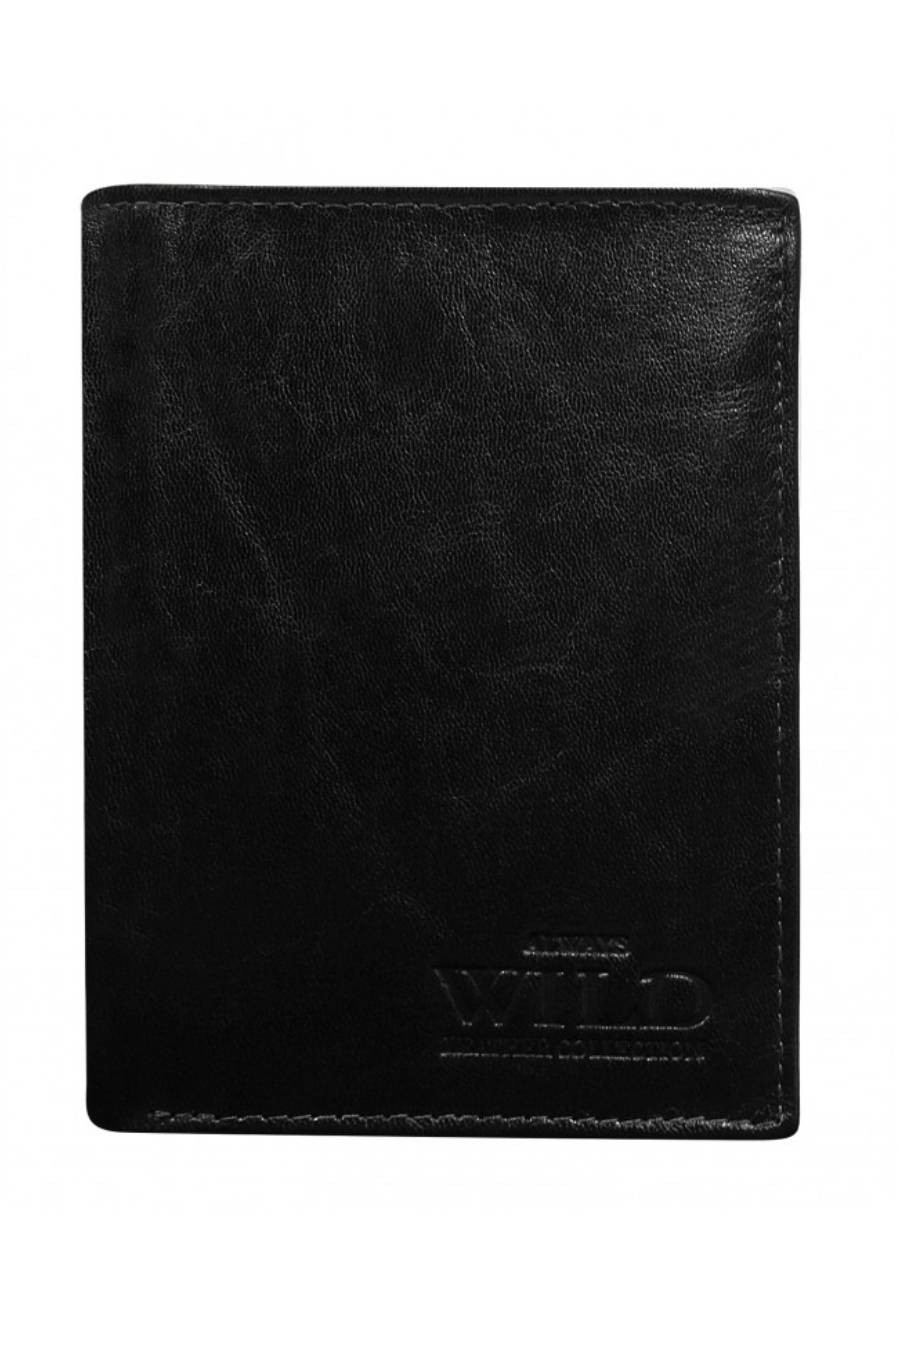 Wallet WILD N4-VTK-Black